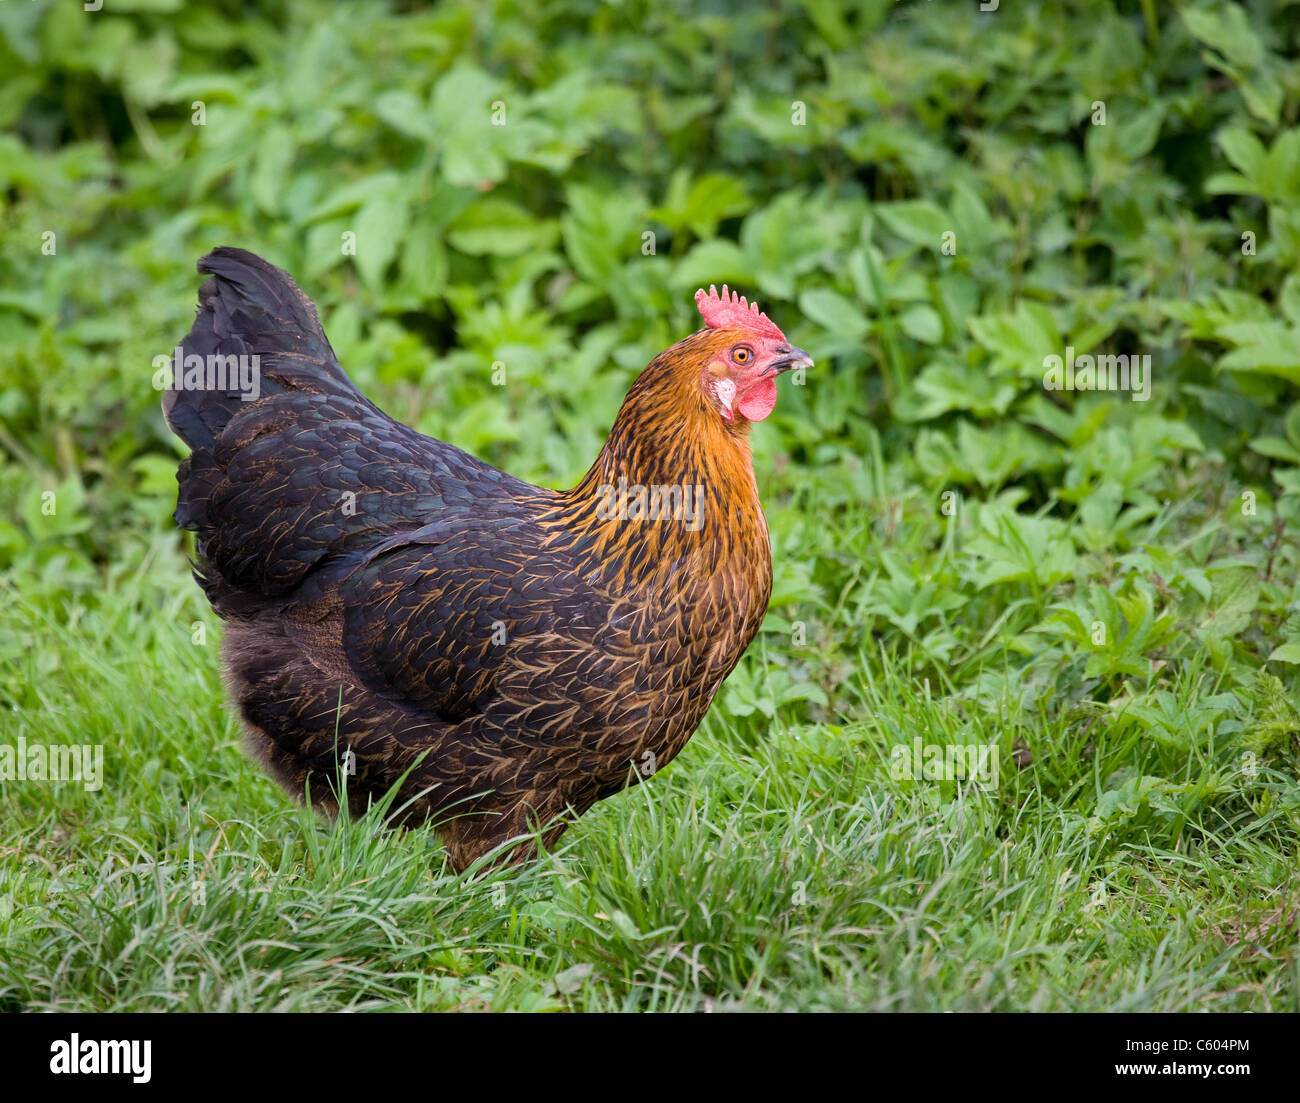 Fine free range chicken hen in farmyard vegetation Stock Photo